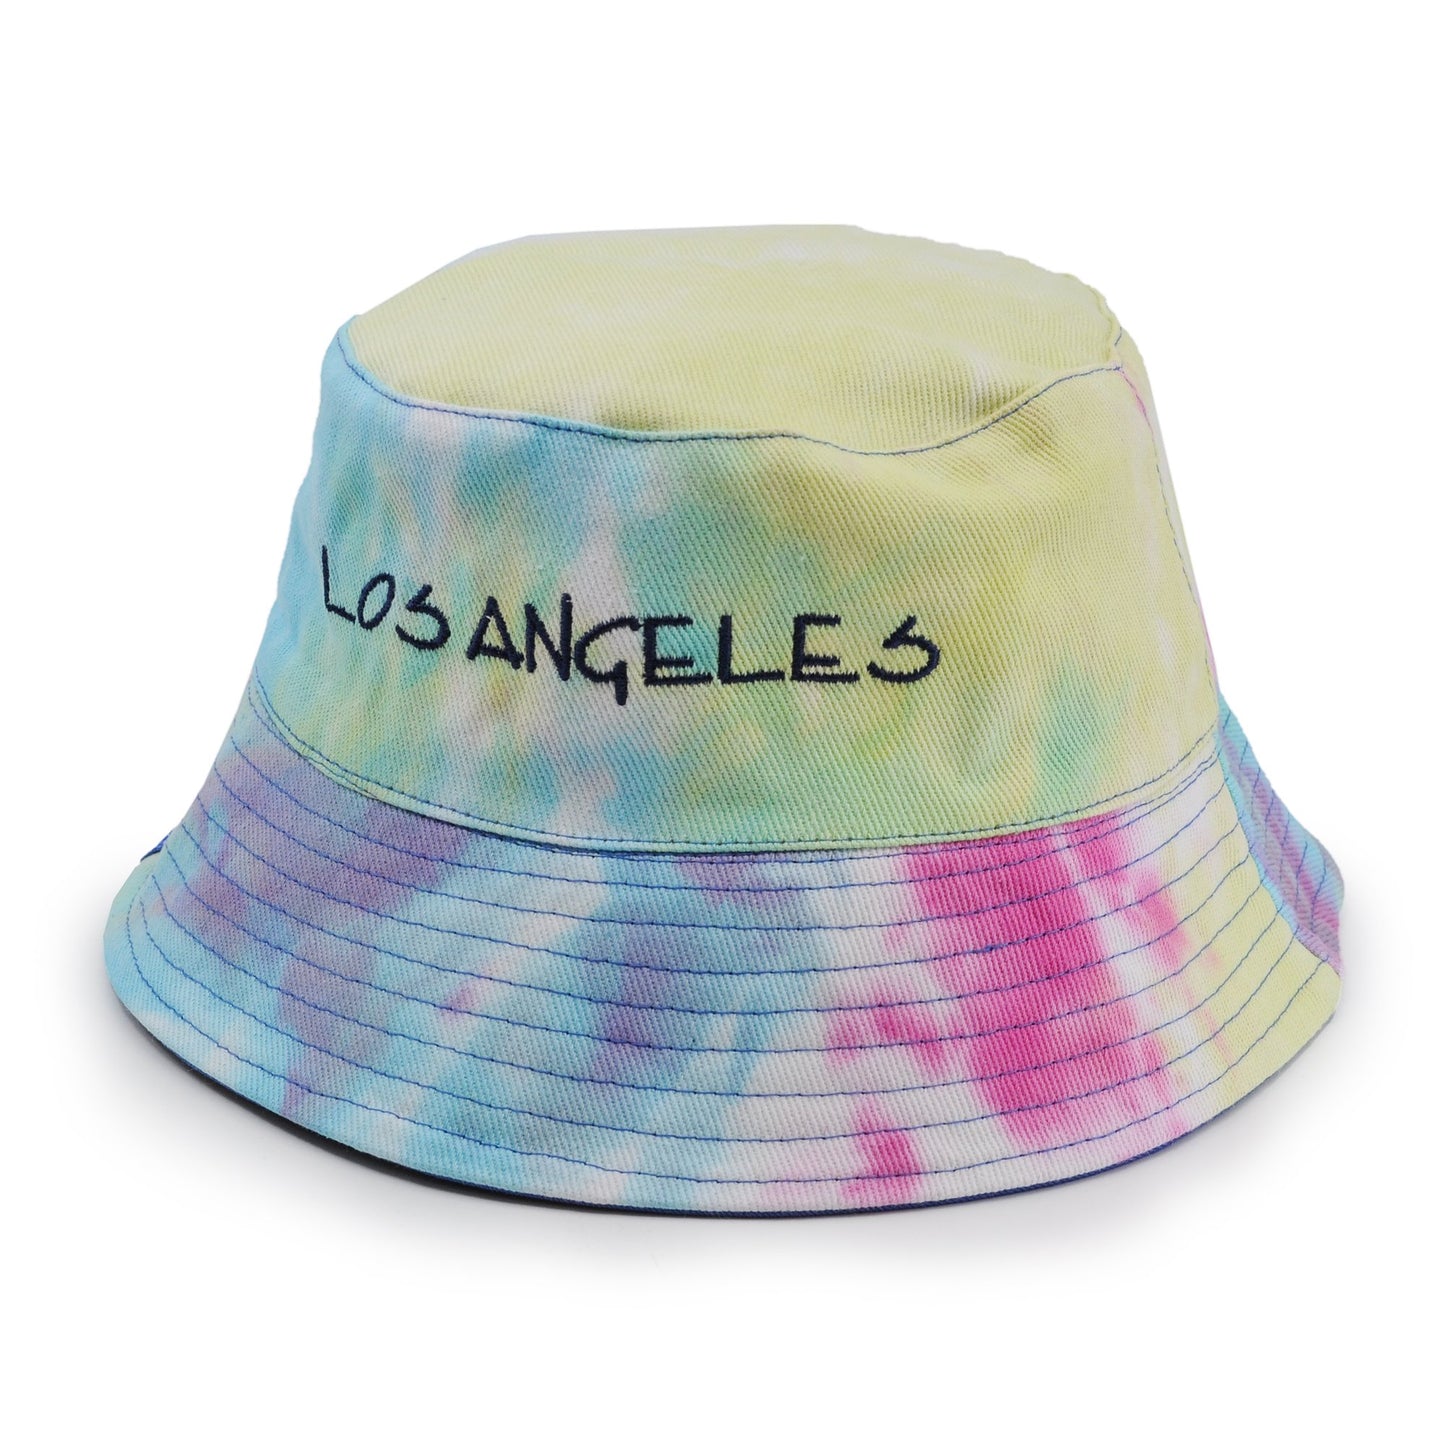 Reversible Your Beach City Unisex 100% Cotton Packable Summer Travel Bucket Beach Sun Hat Outdoor Cap. (Tie Dye Rainbow/Blue)